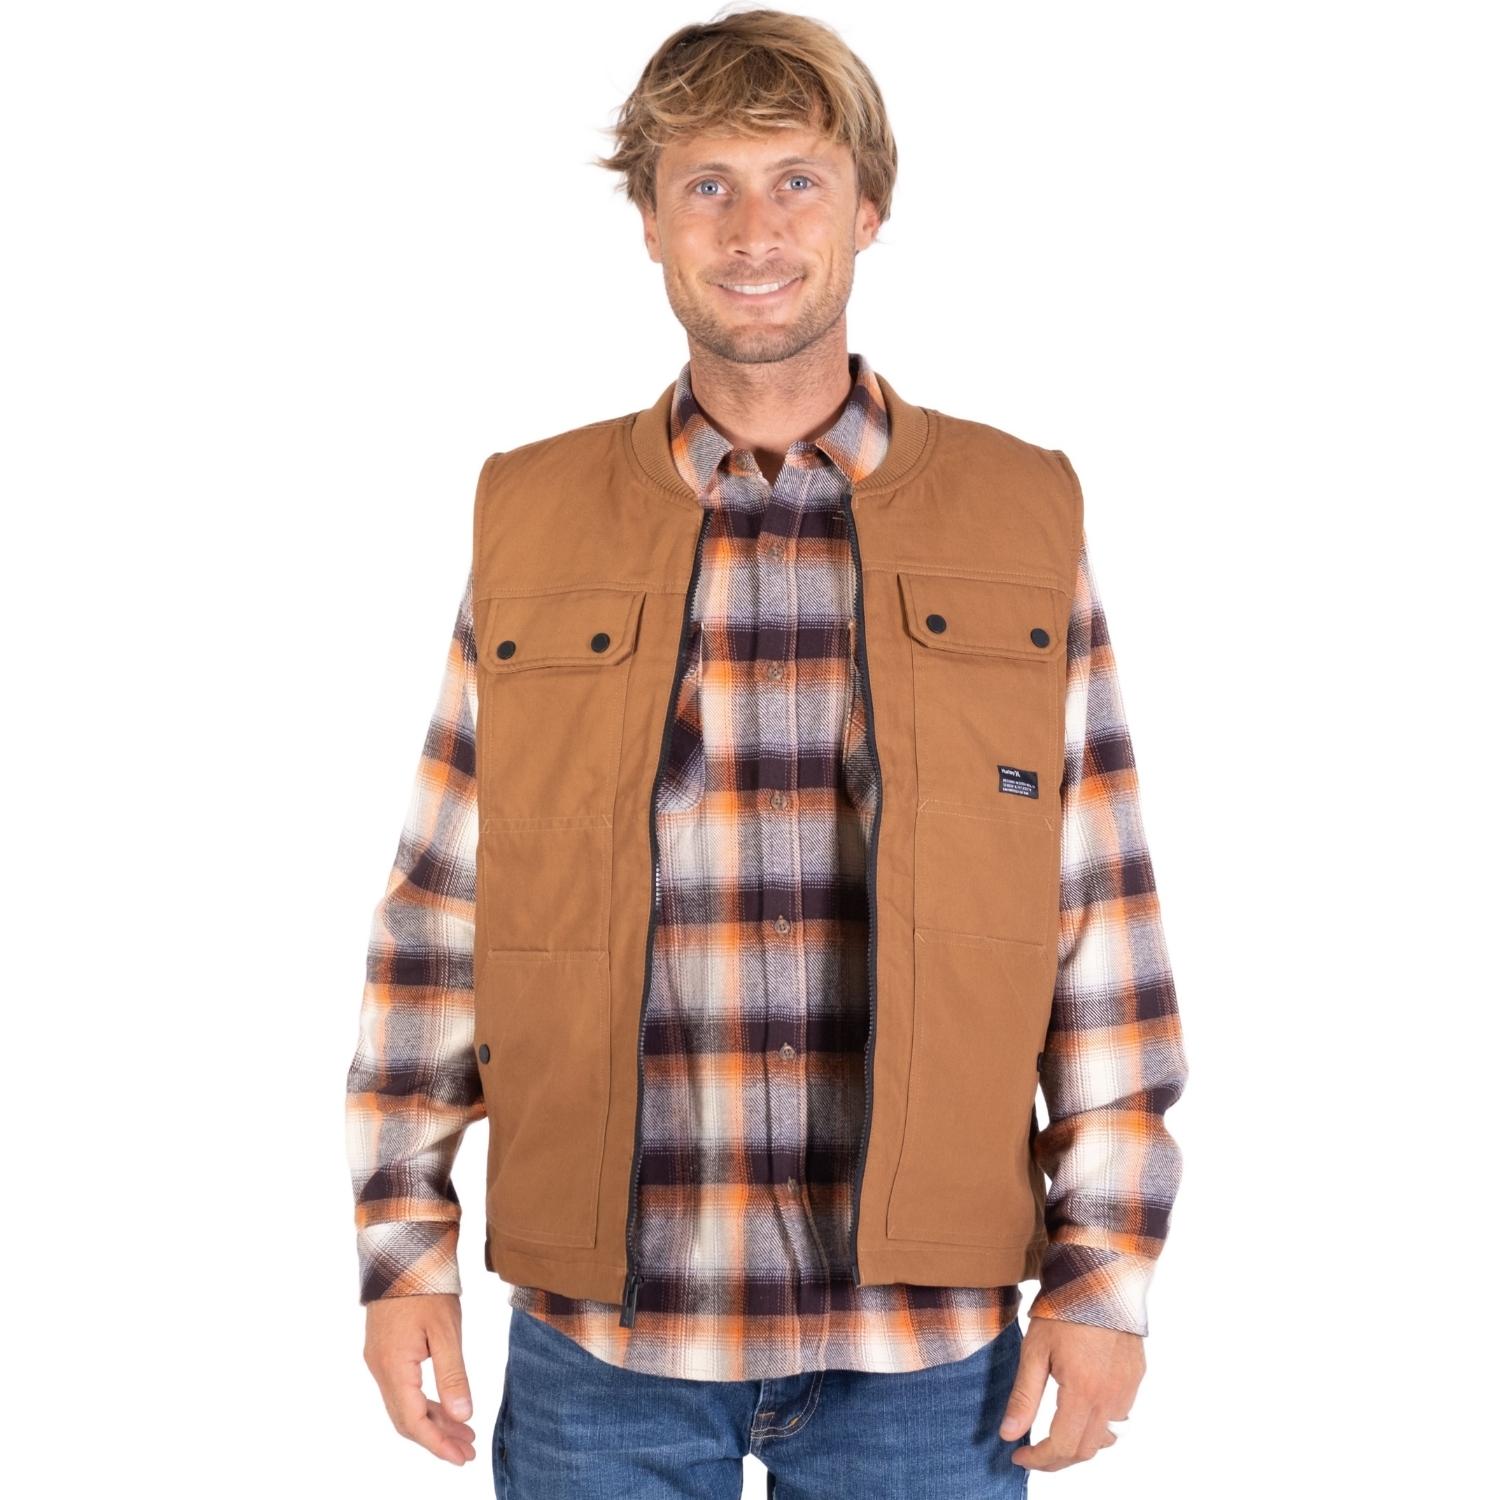 Hurley Roth Multi Pocket Worker Vest Jacket - Ale Brown - Mens Gilet Jacket by Hurley